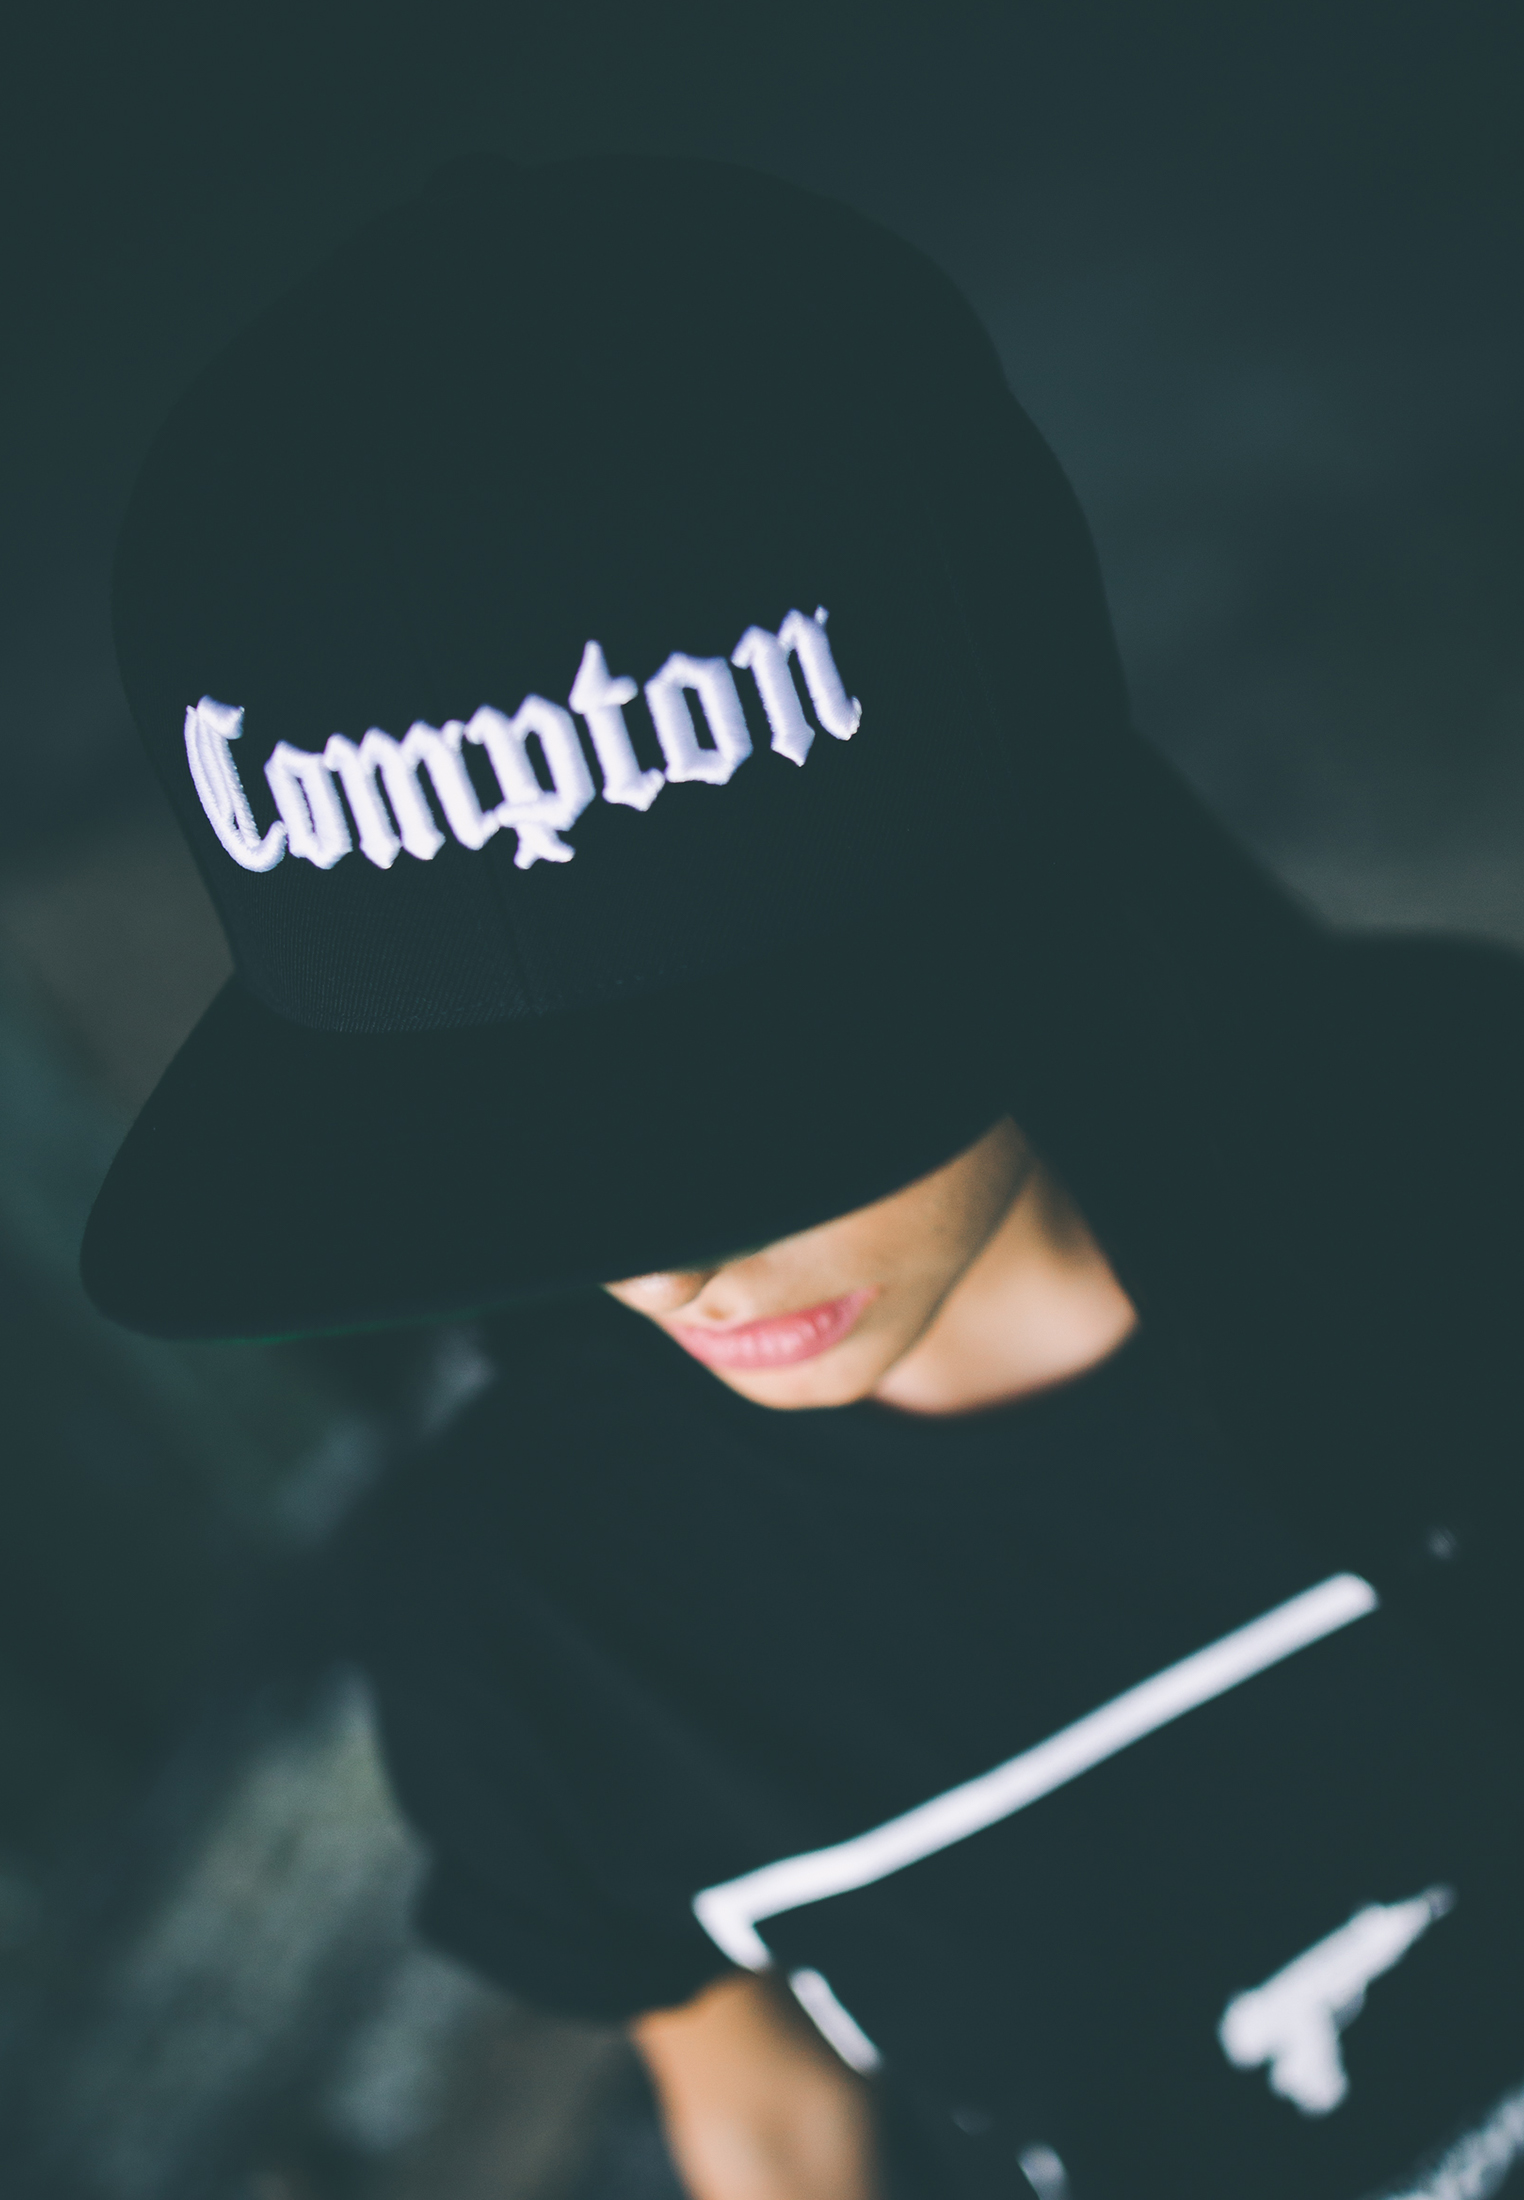 Compton Snapback Black